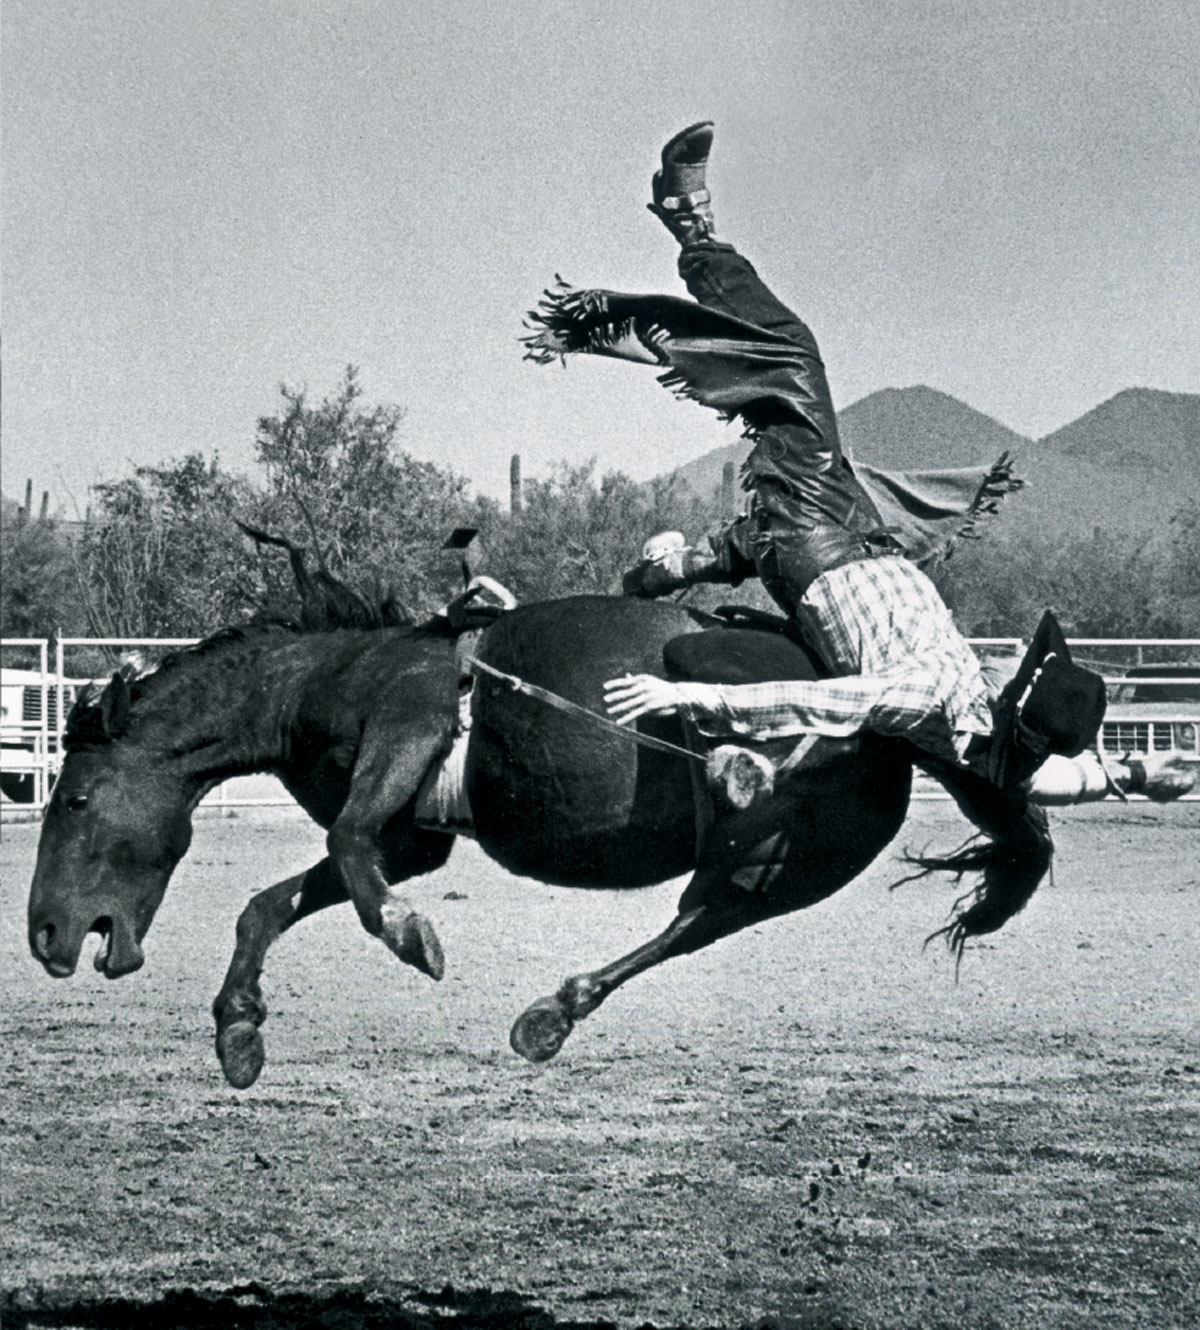 Dennis Mann riding “Soldier,” Pro Rodeo Cowboys Association, Cave Creek, Arizona, 1983.